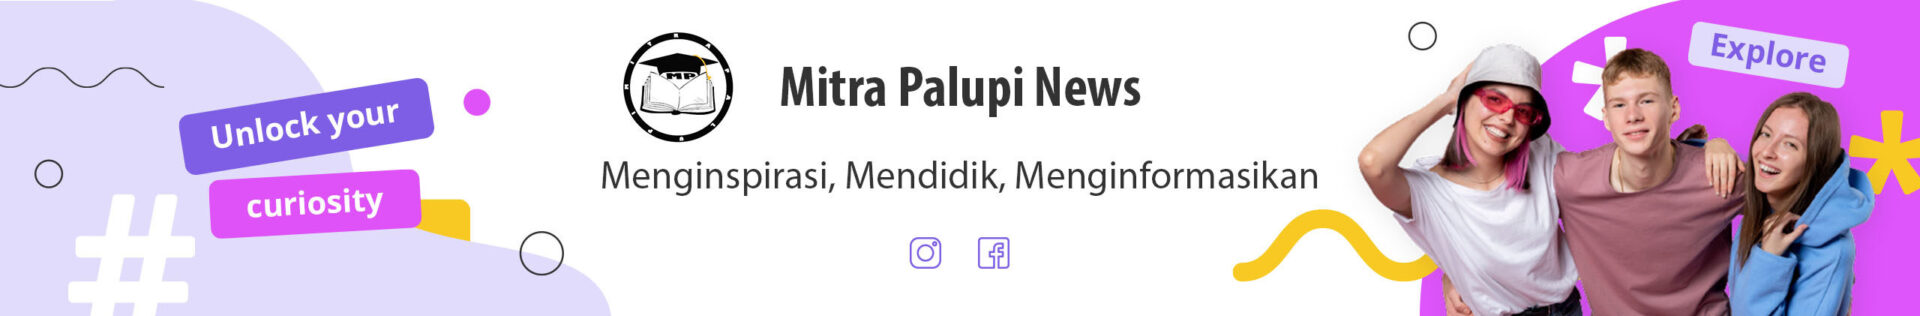 MitraPalupi News